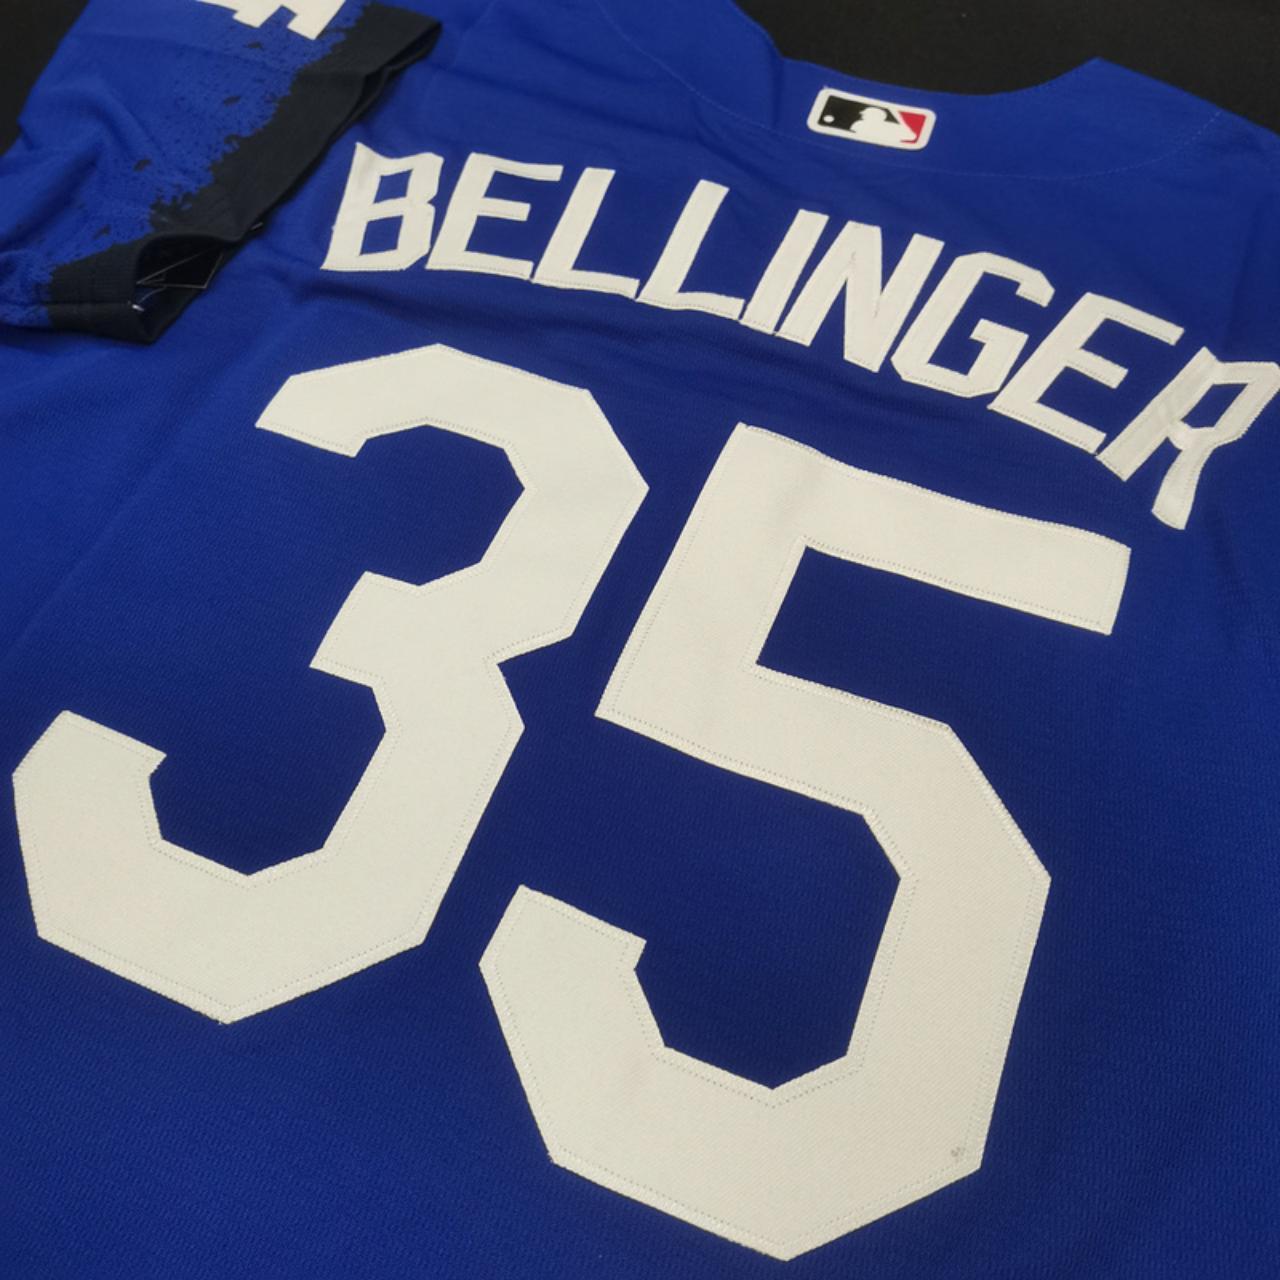 Nike Los Angeles Dodgers City Connect Bellinger #35 Jersey Men's Size:  Medium